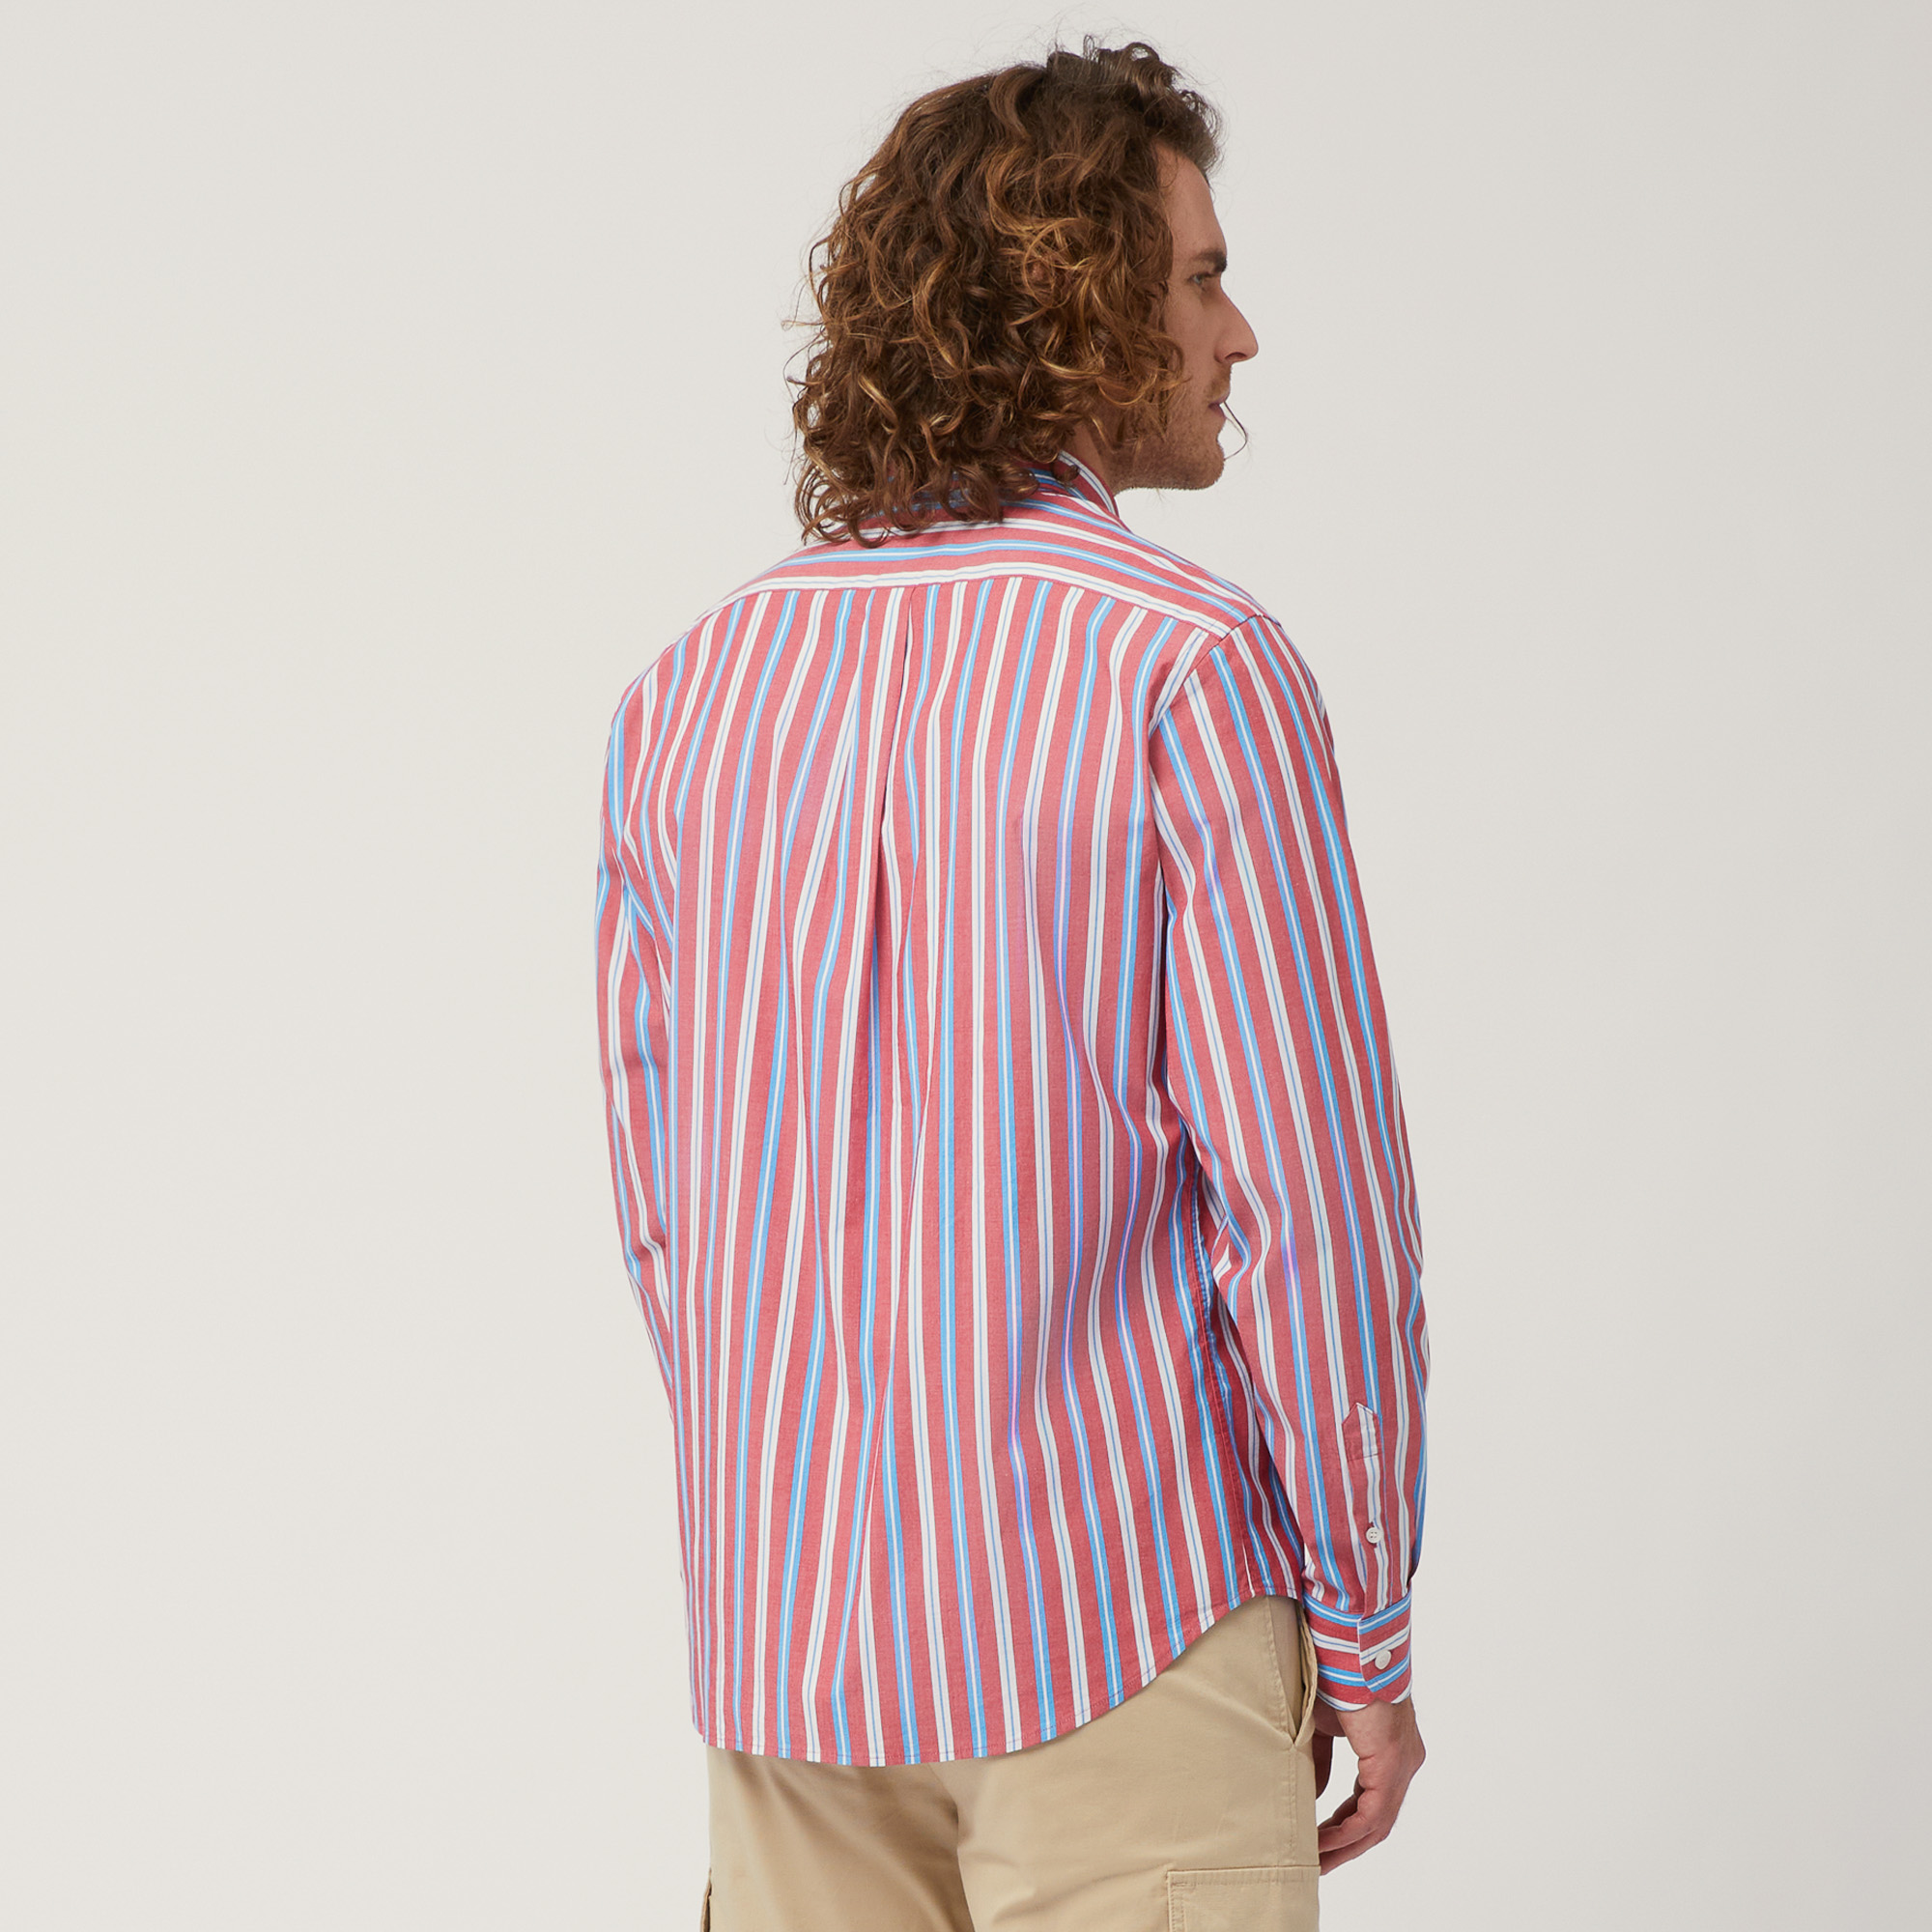 Camicia In Cotone Stretch A Righe Alternate, Rosso Chiaro, large image number 1